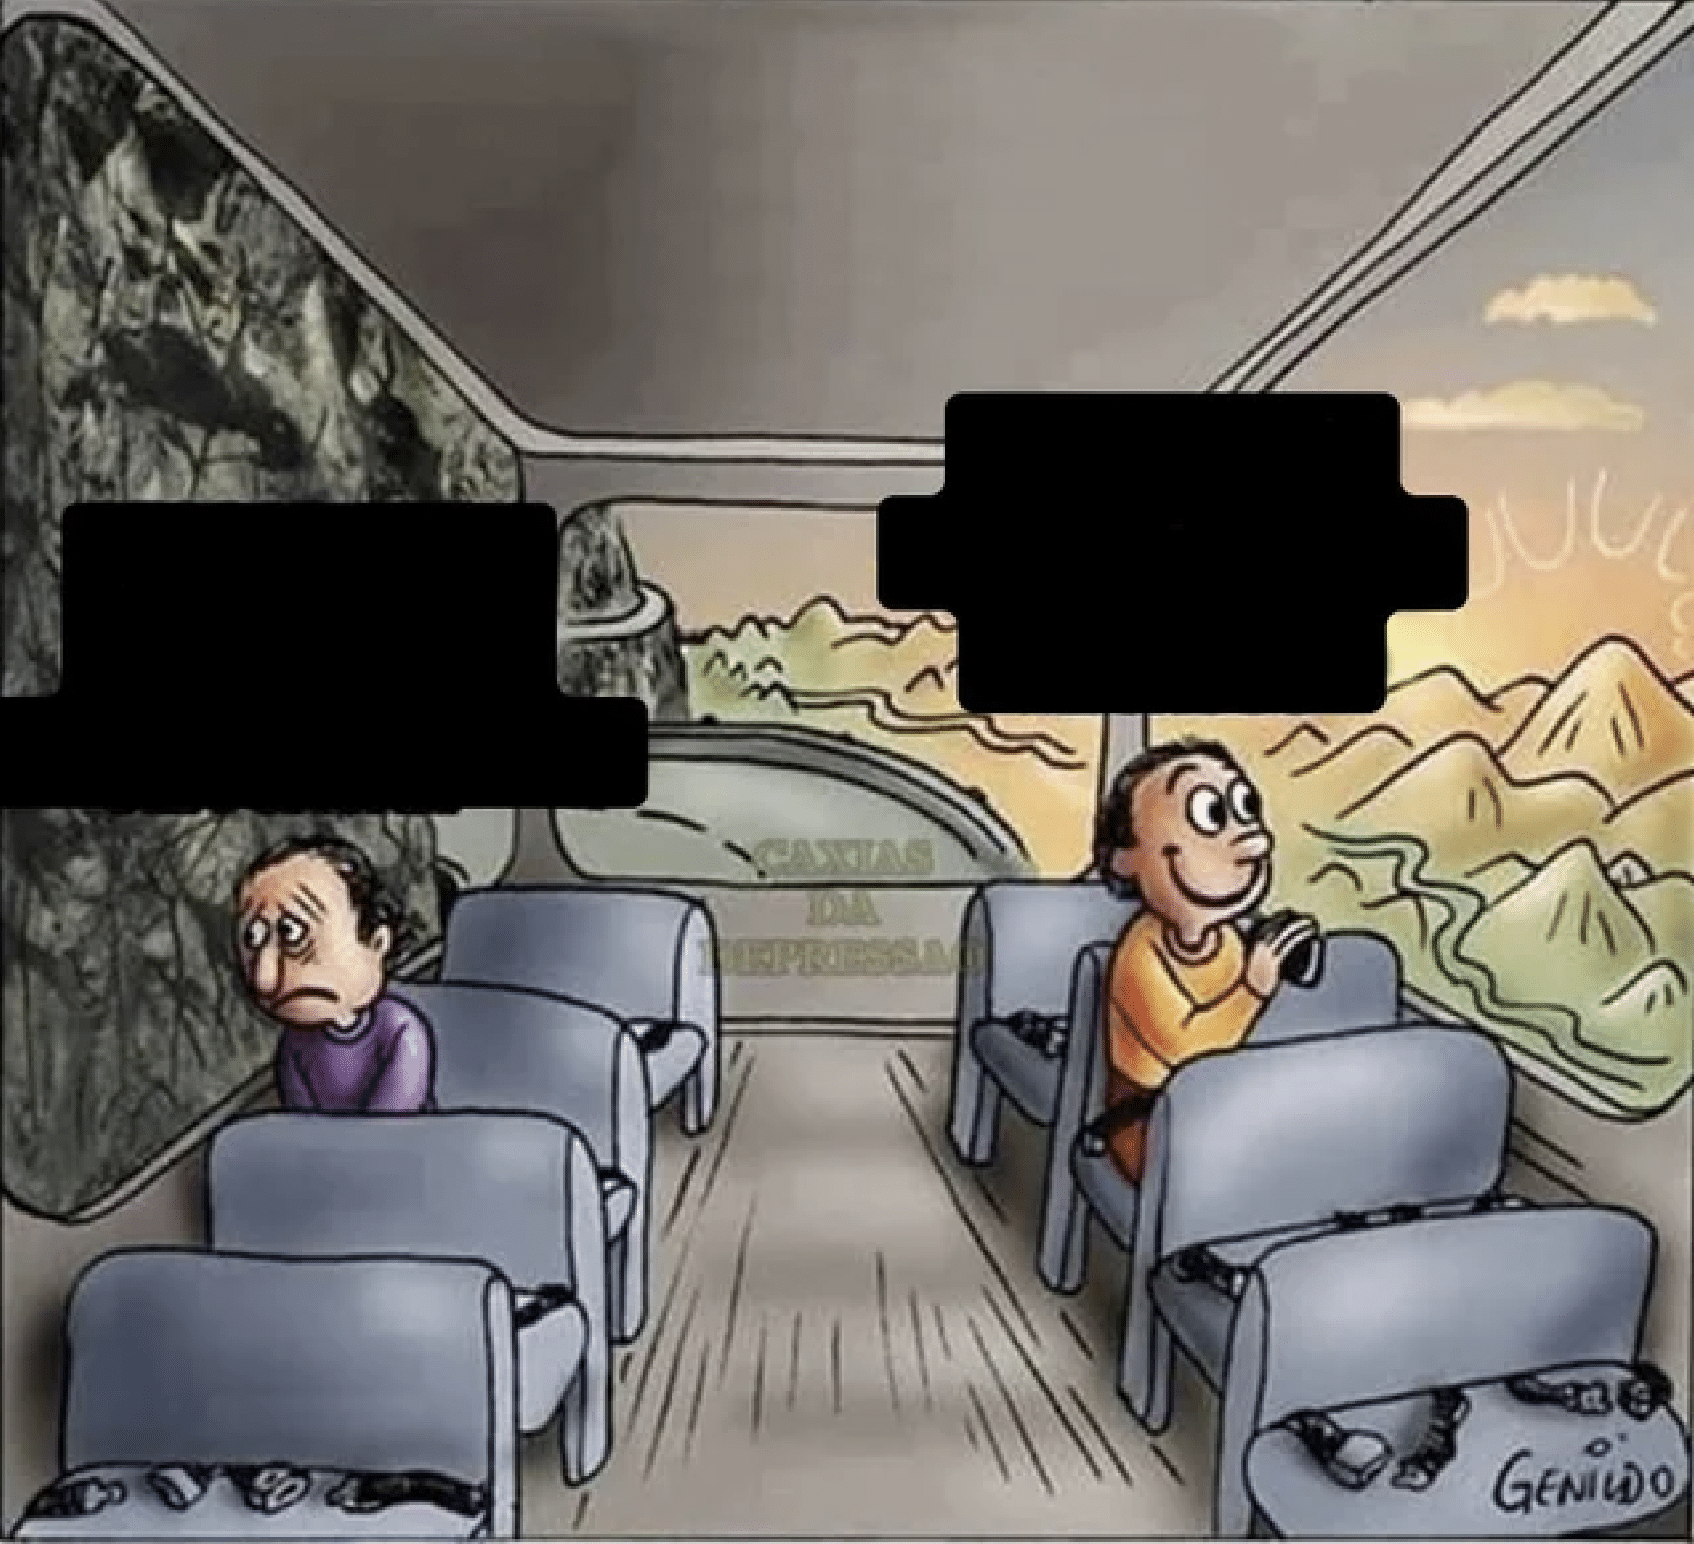 Meme Generator - Sad and happy guys riding bus (alt) - Newfa Stuff.